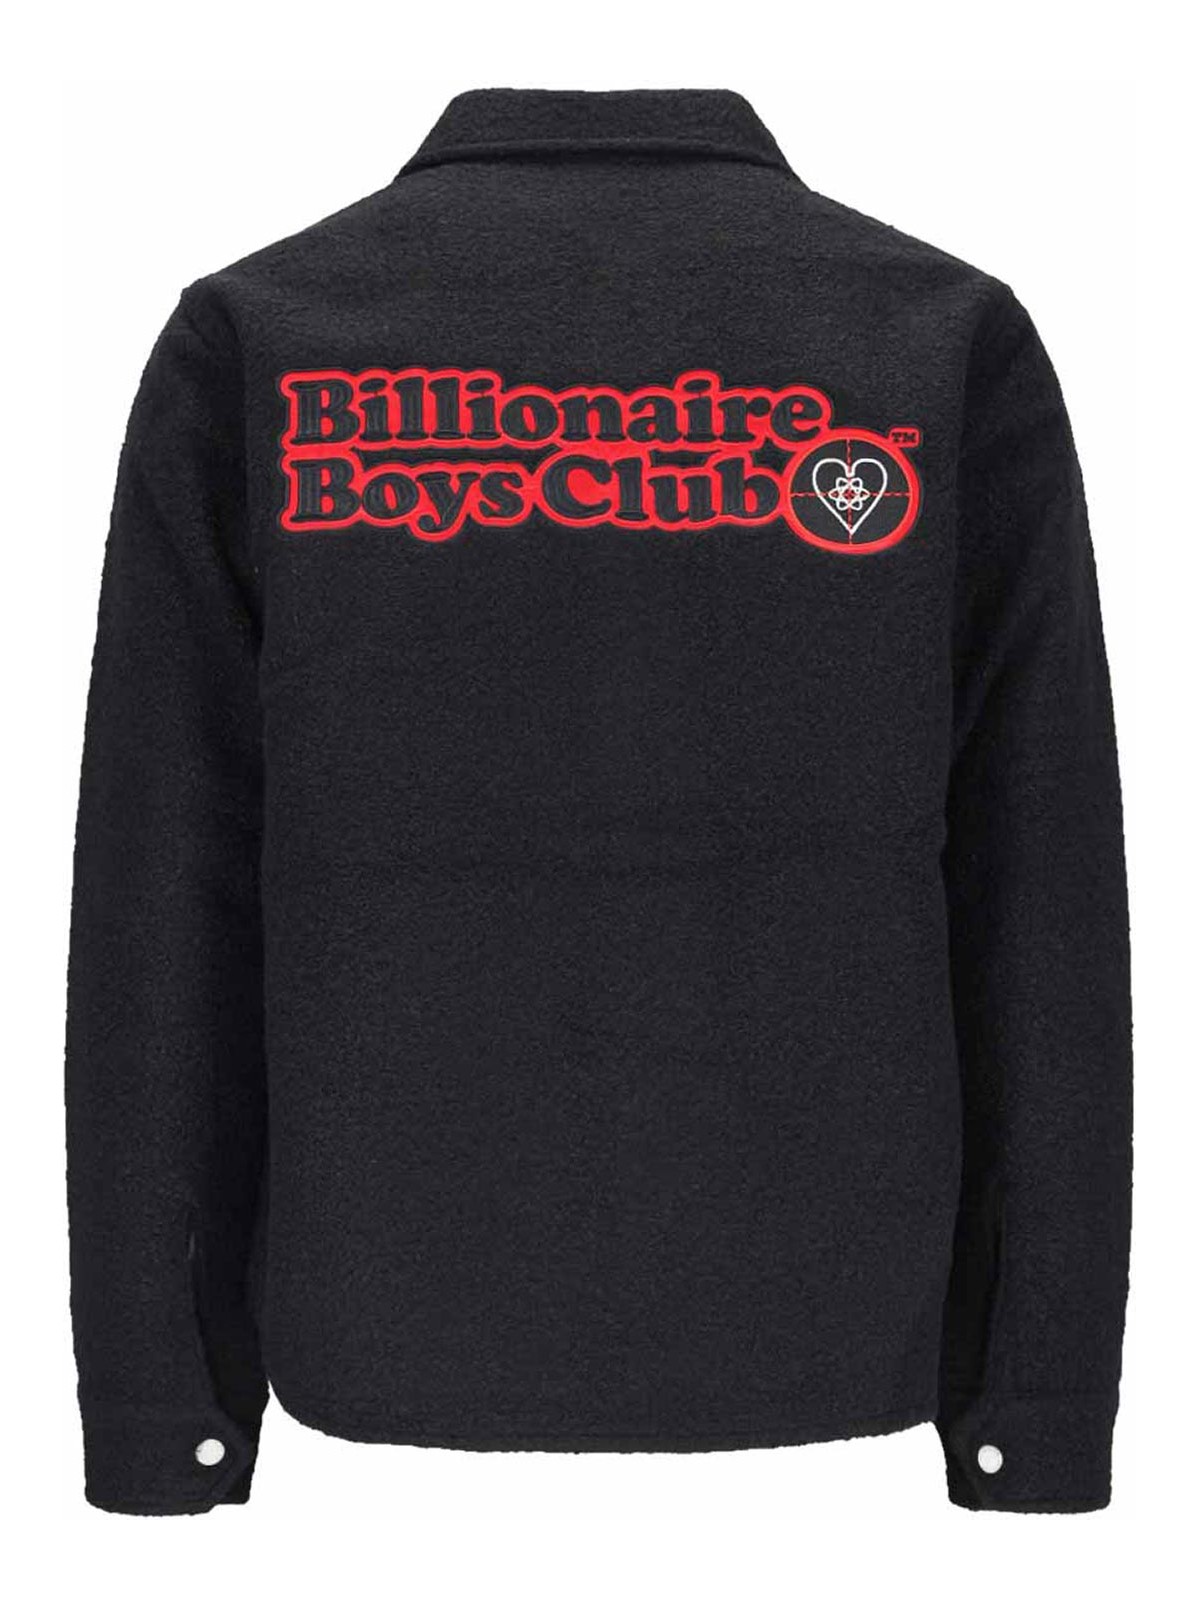 Shirts Billionaire - Logo shirt - B23321BLACK | thebs.com [ikrix.com]